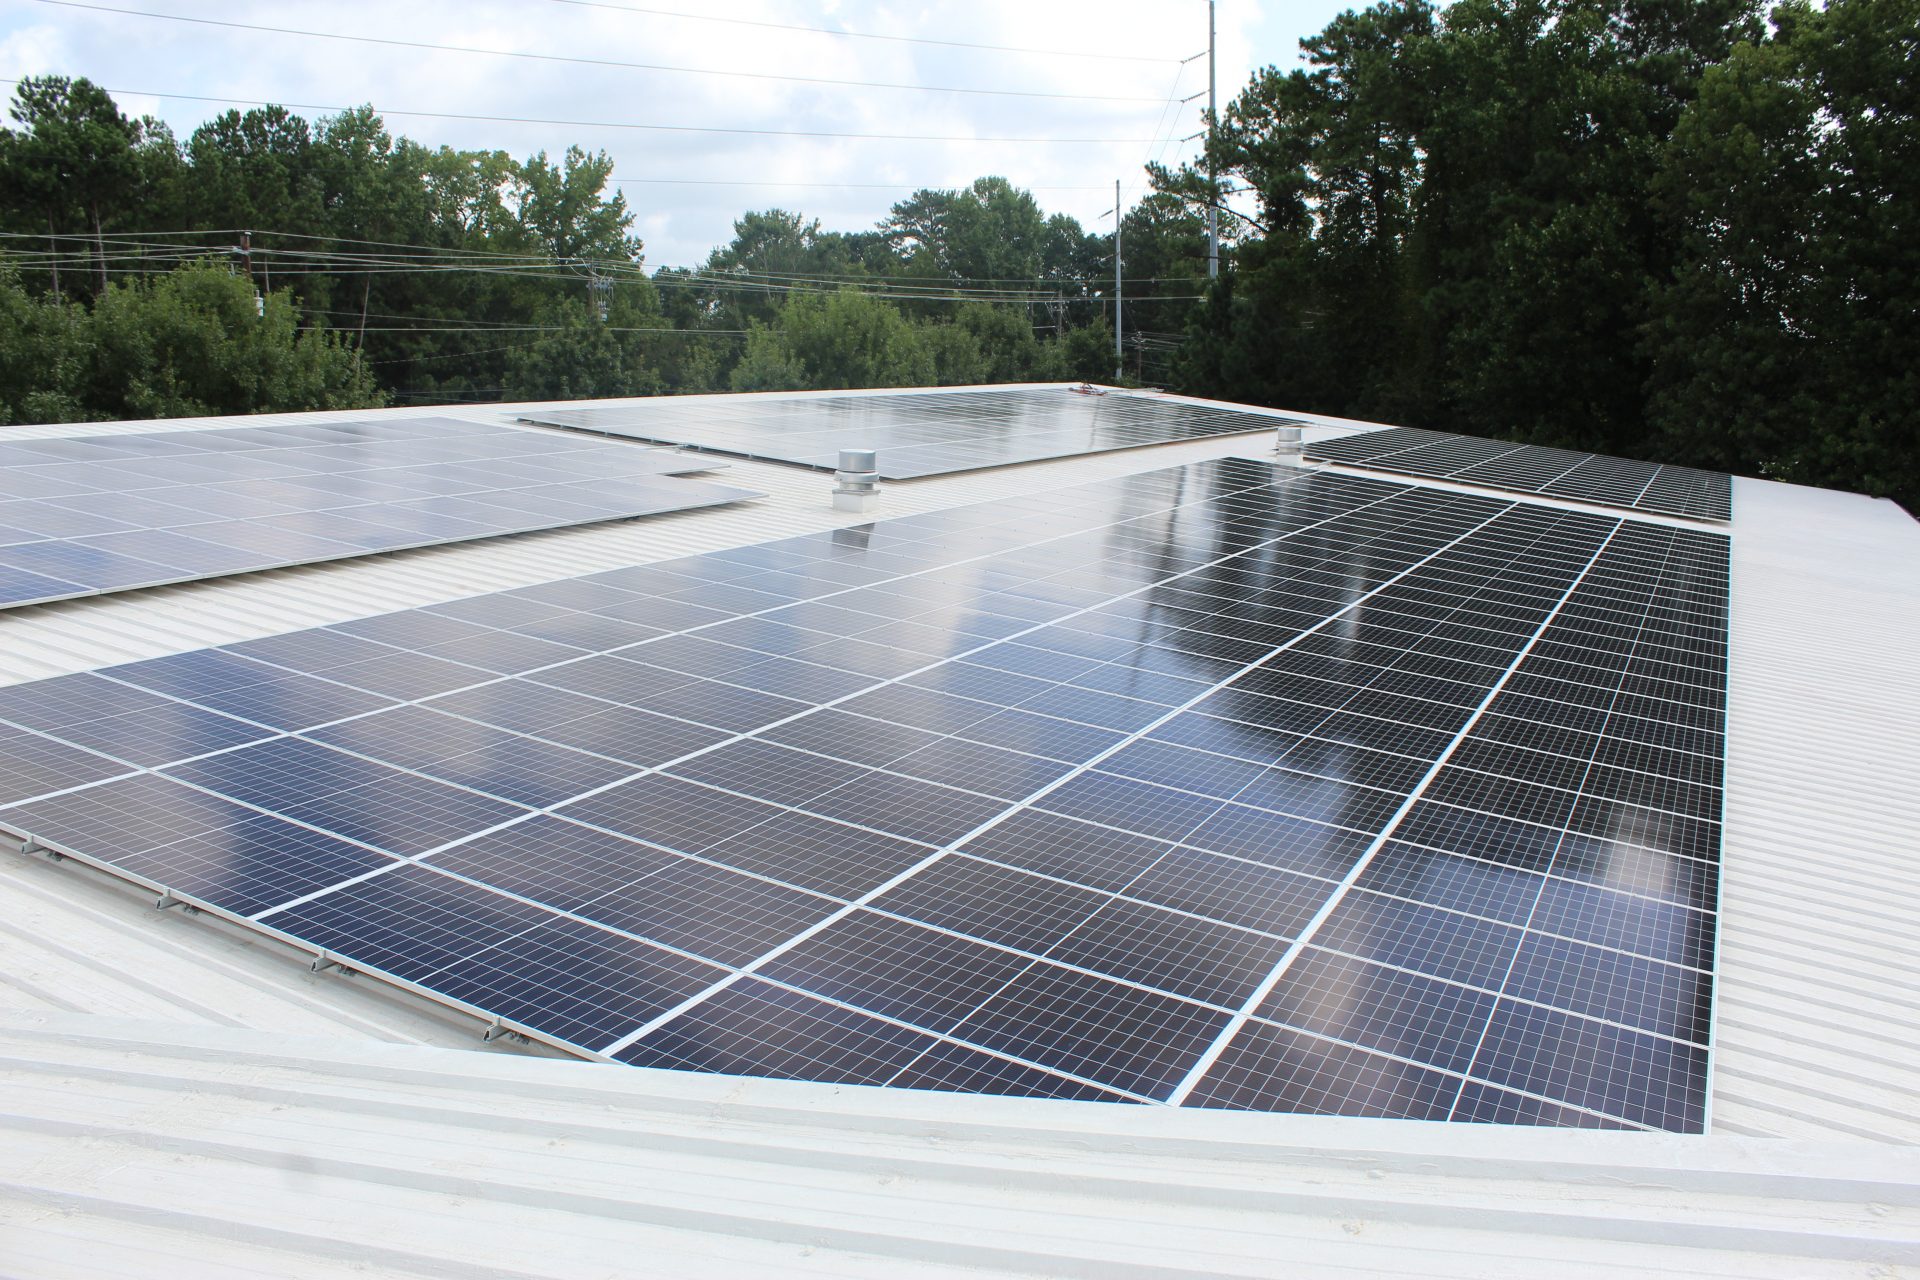 The SAE School 30kW rooftop solar array